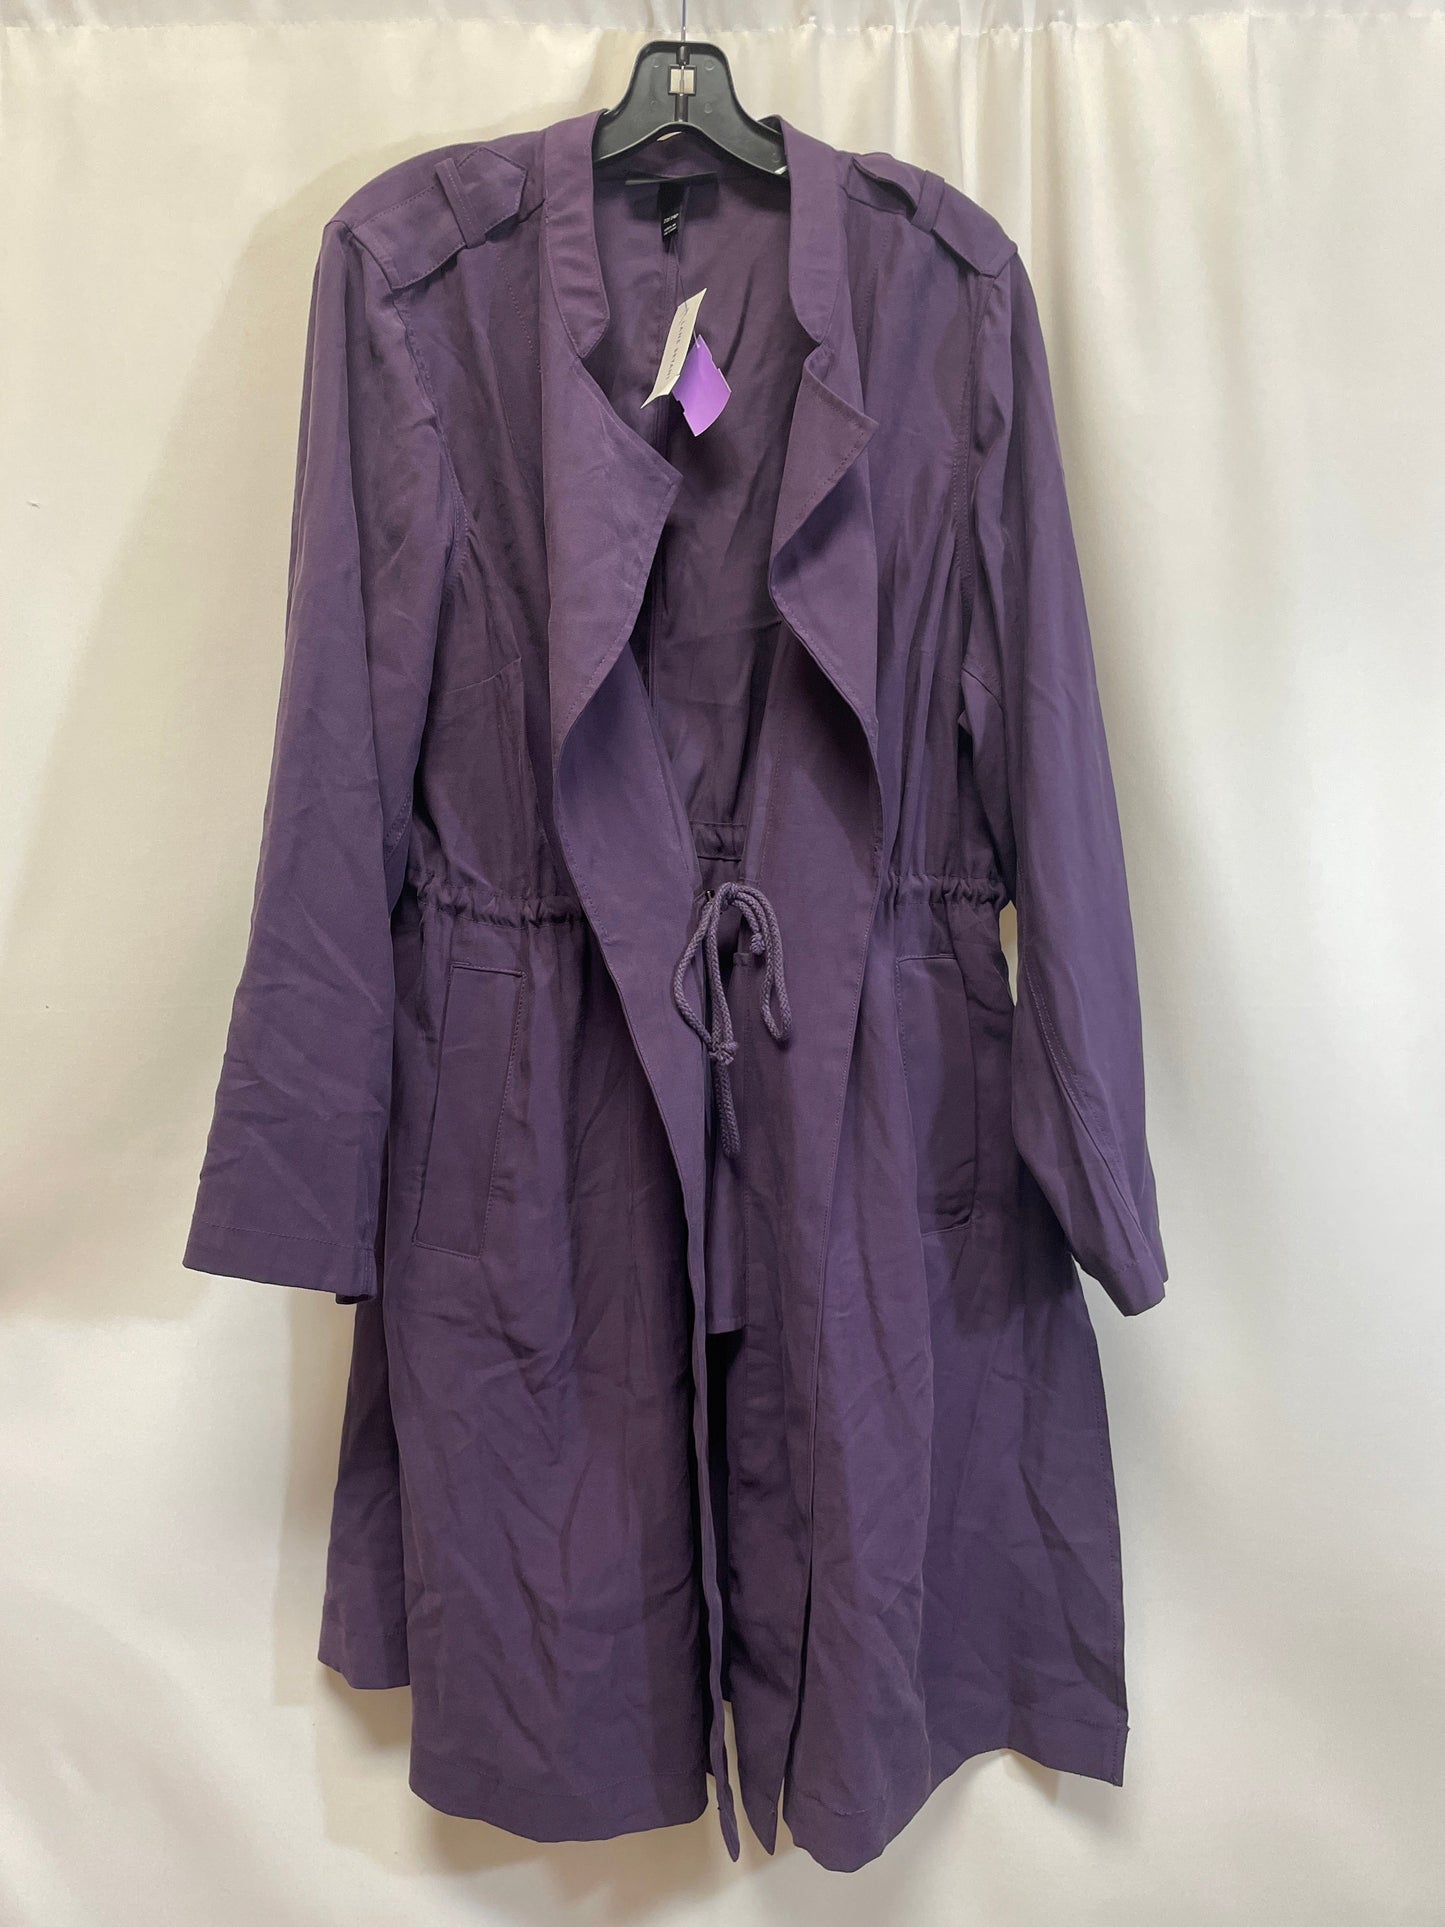 Purple Jacket Moto Lane Bryant, Size 3x